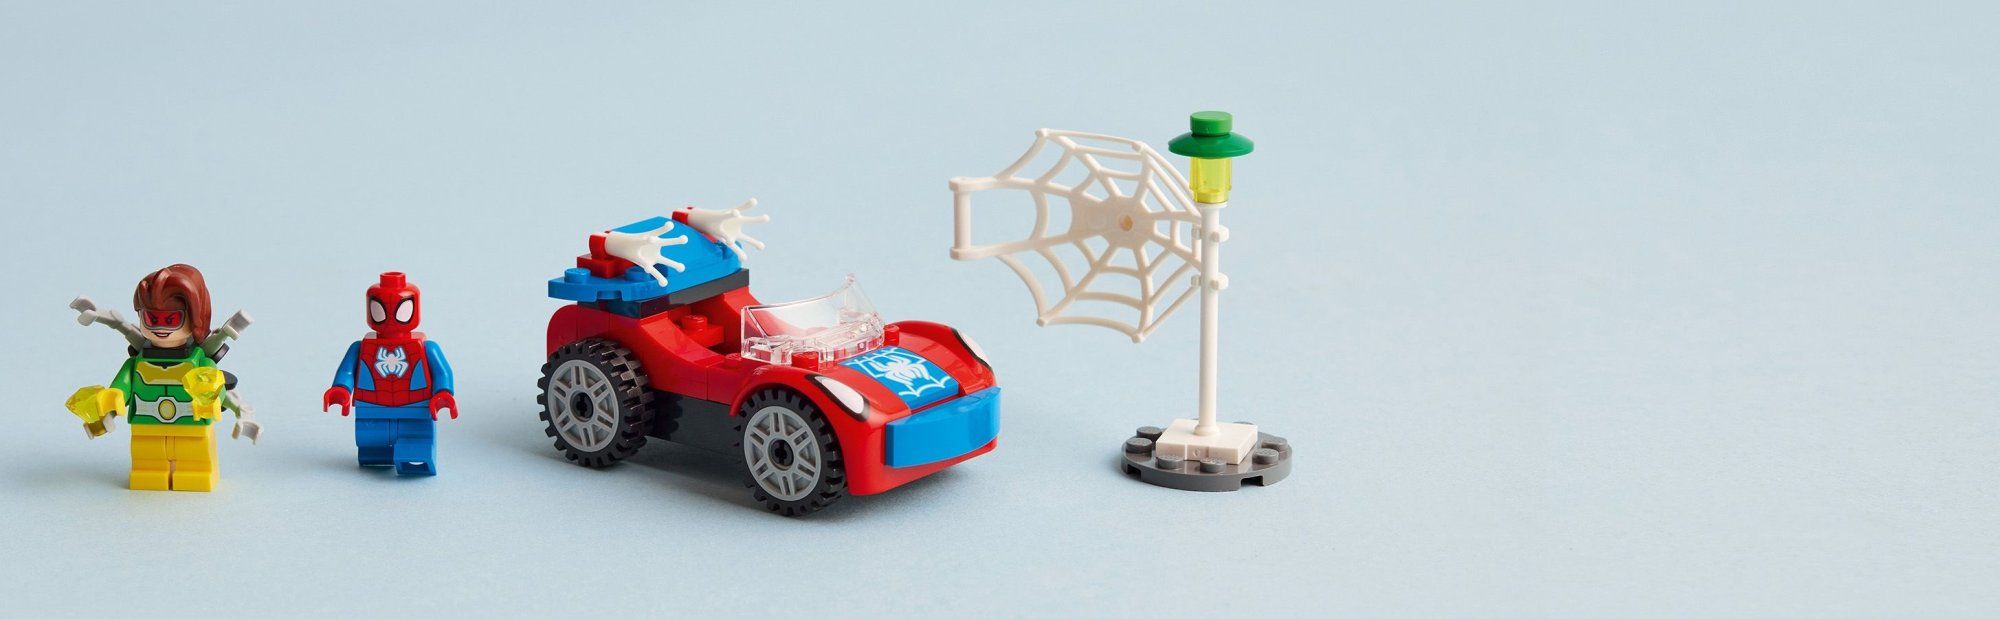 LEGO Marvel 10789 Spider-Man v aute a Doc Ock